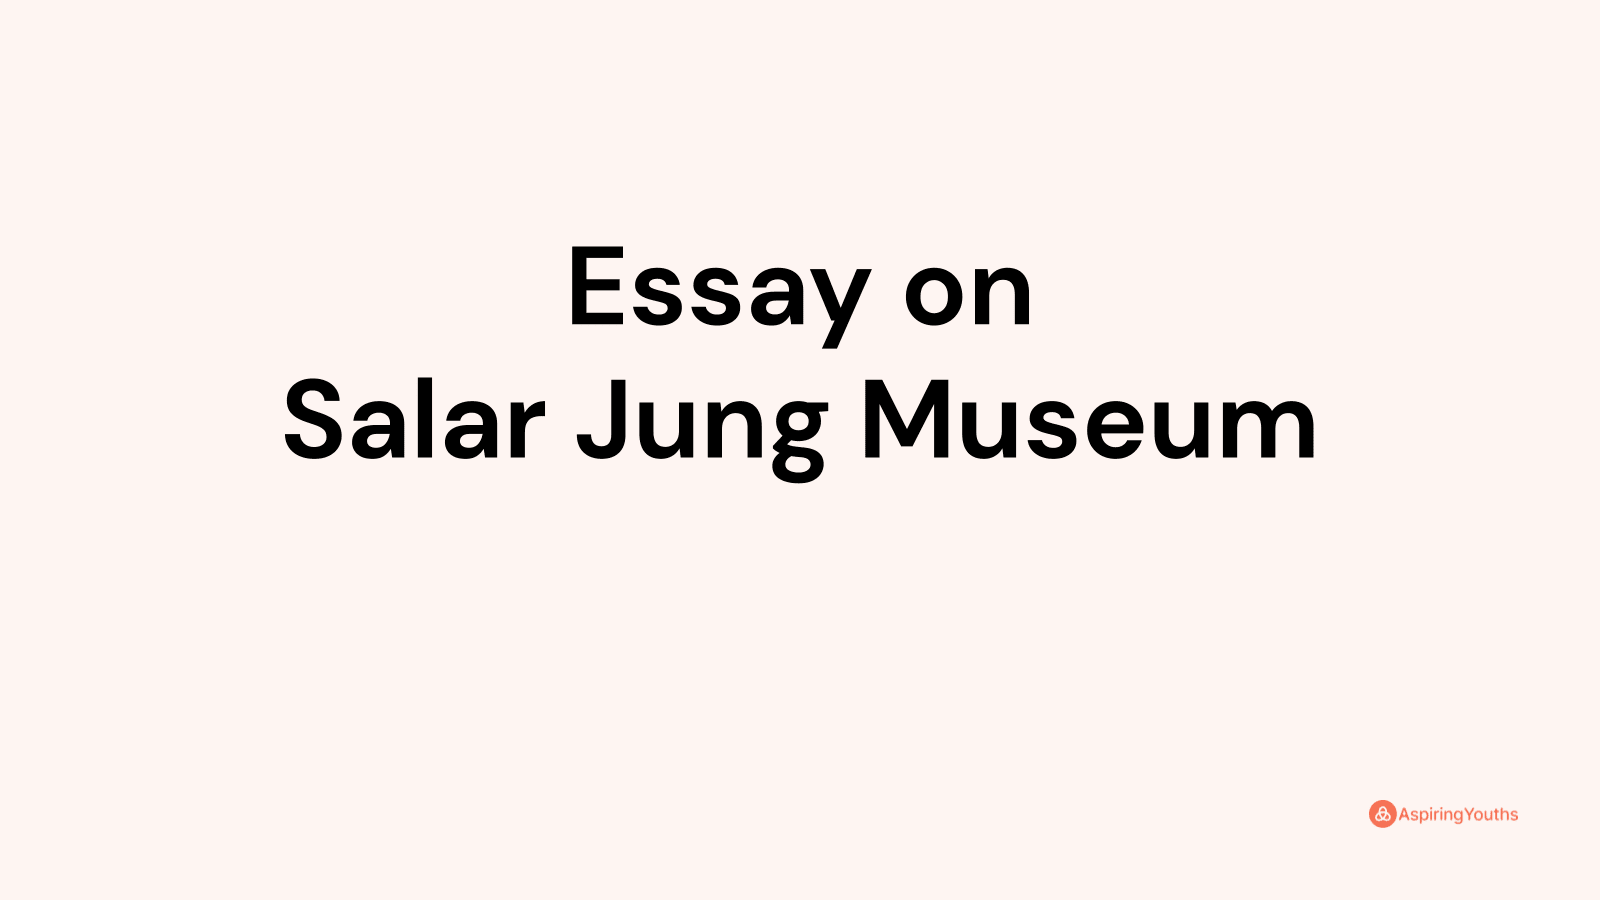 short essay on salar jung museum in english